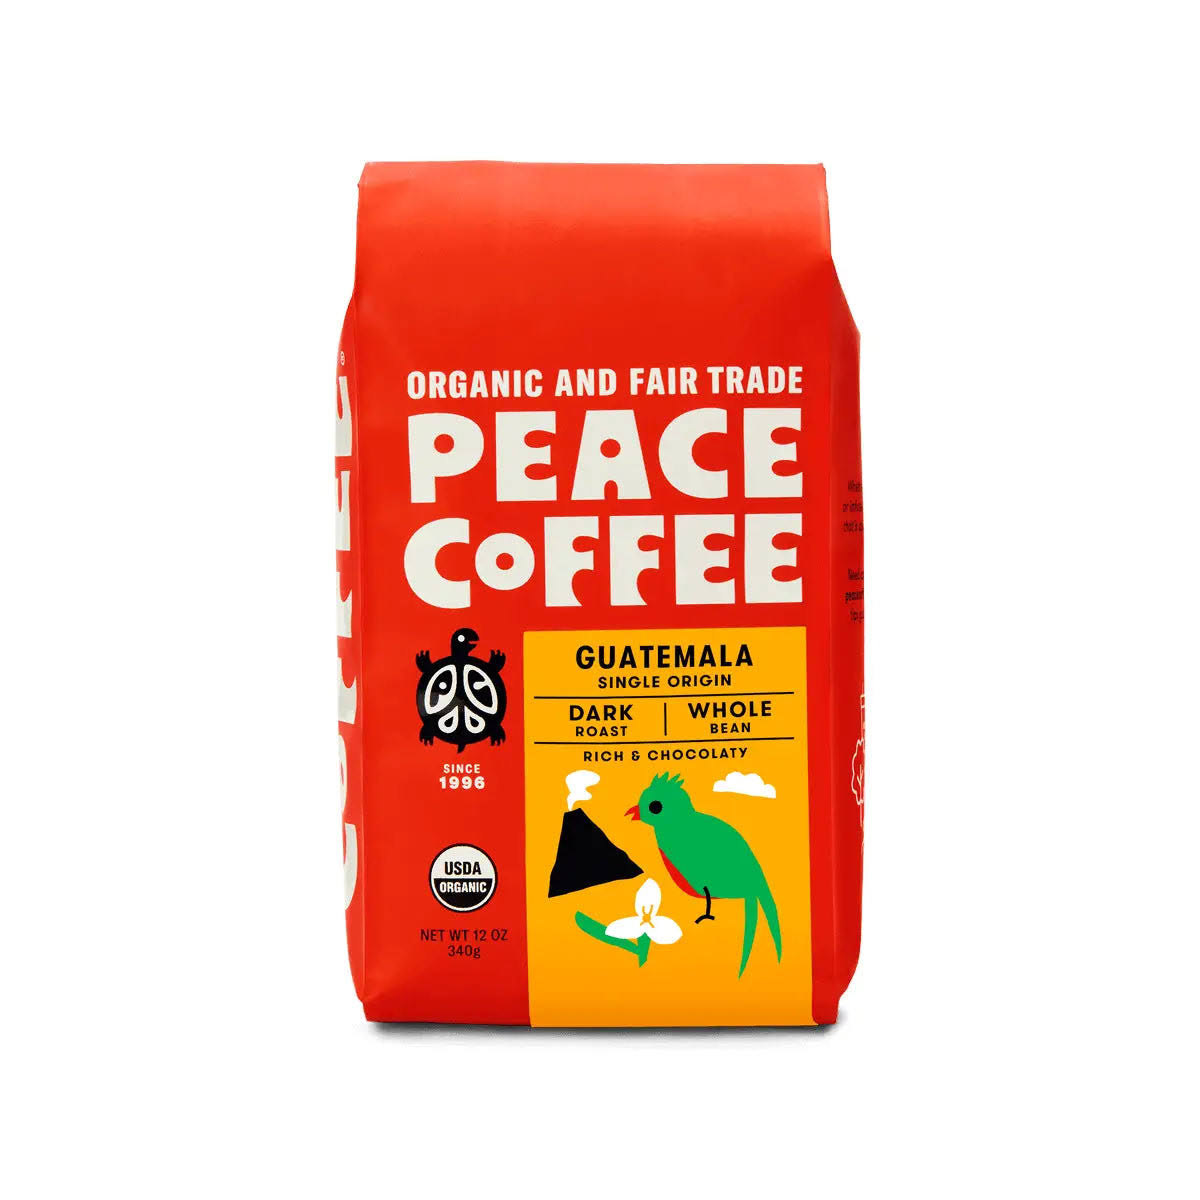 Peace Coffee Guatemalan Dark Roast Groud Coffee - 12 oz